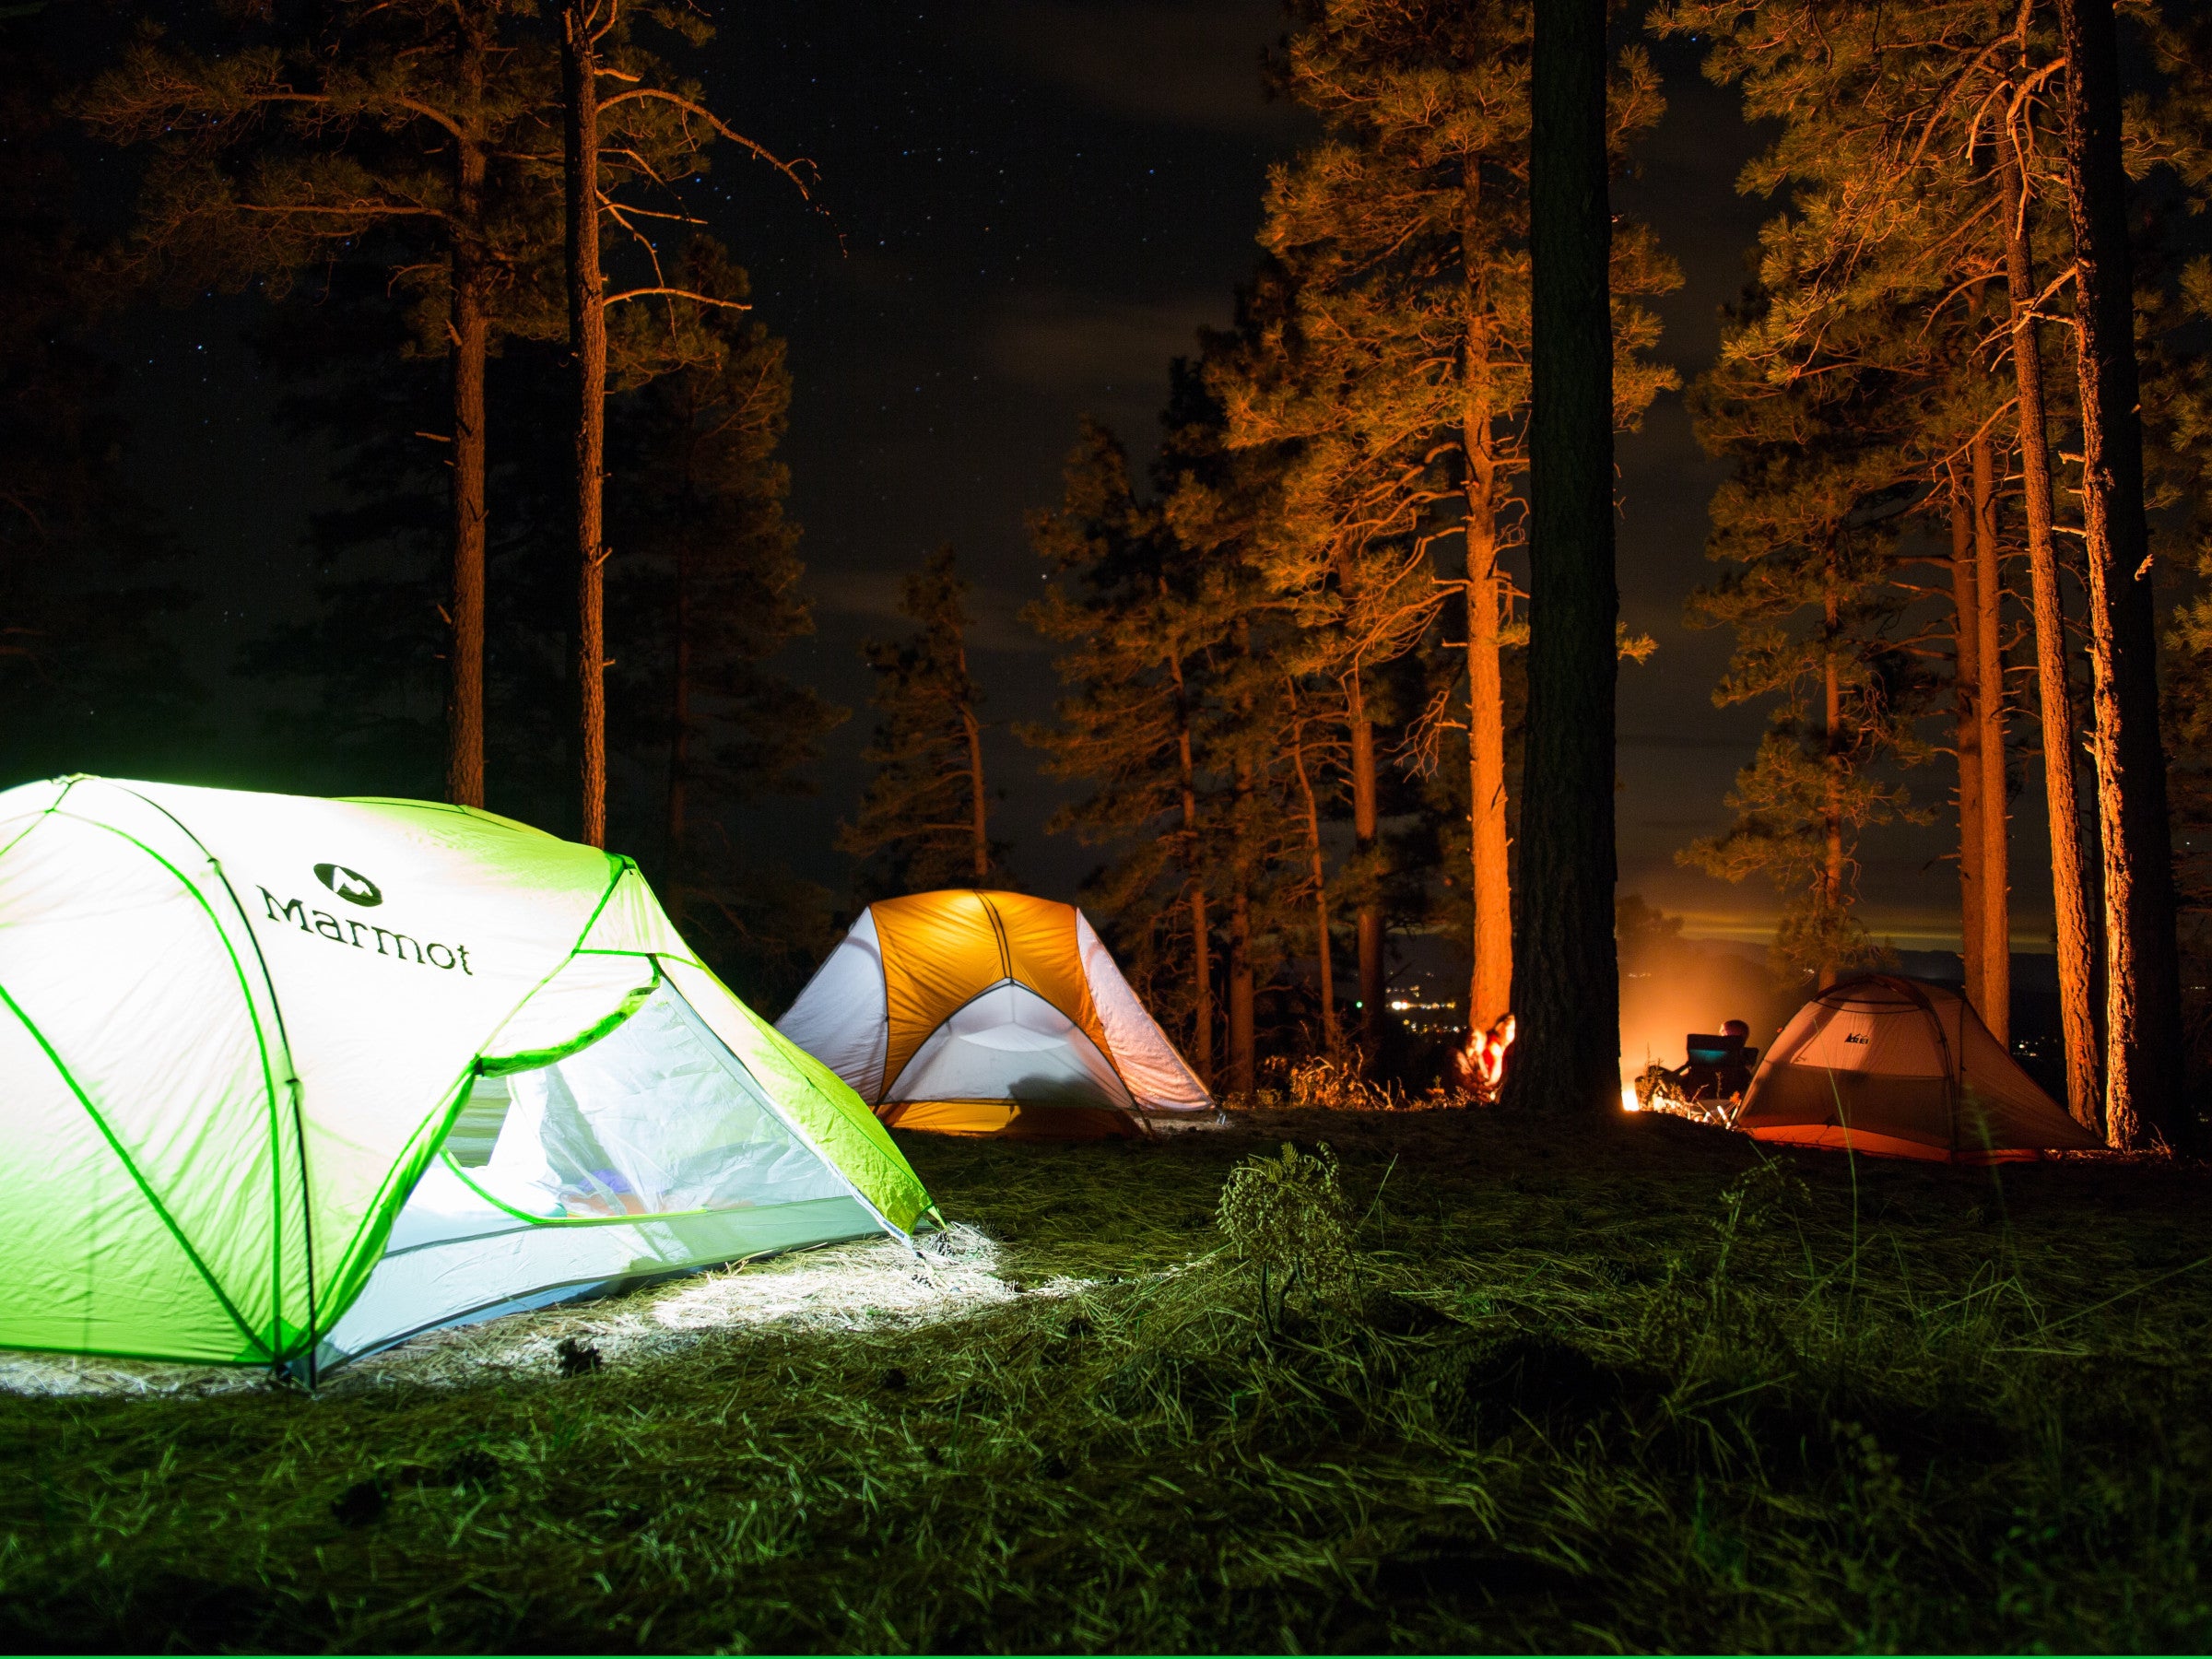 When we go camping. Палатка best Camp 165*165. Палатка в лесу. Поход с палатками. Лагерь с палатками.